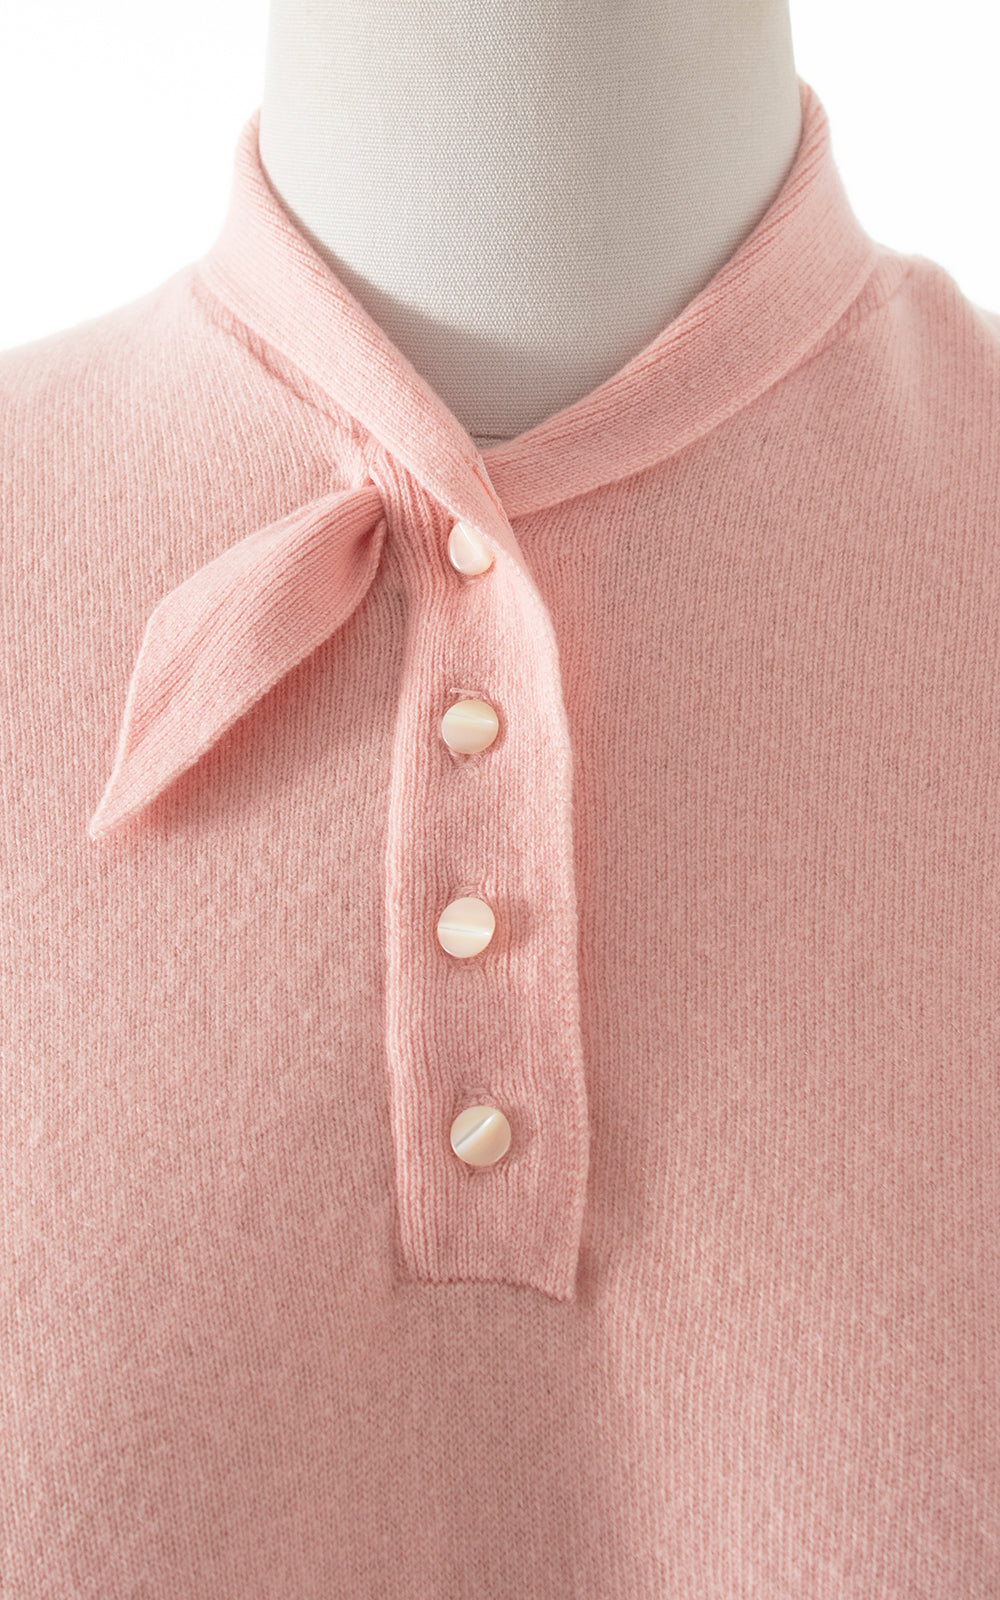 Vintage 1950s 50s Cashmere Blend Knit Light Pink Pullover Sweater Top Birthday Life Vintage